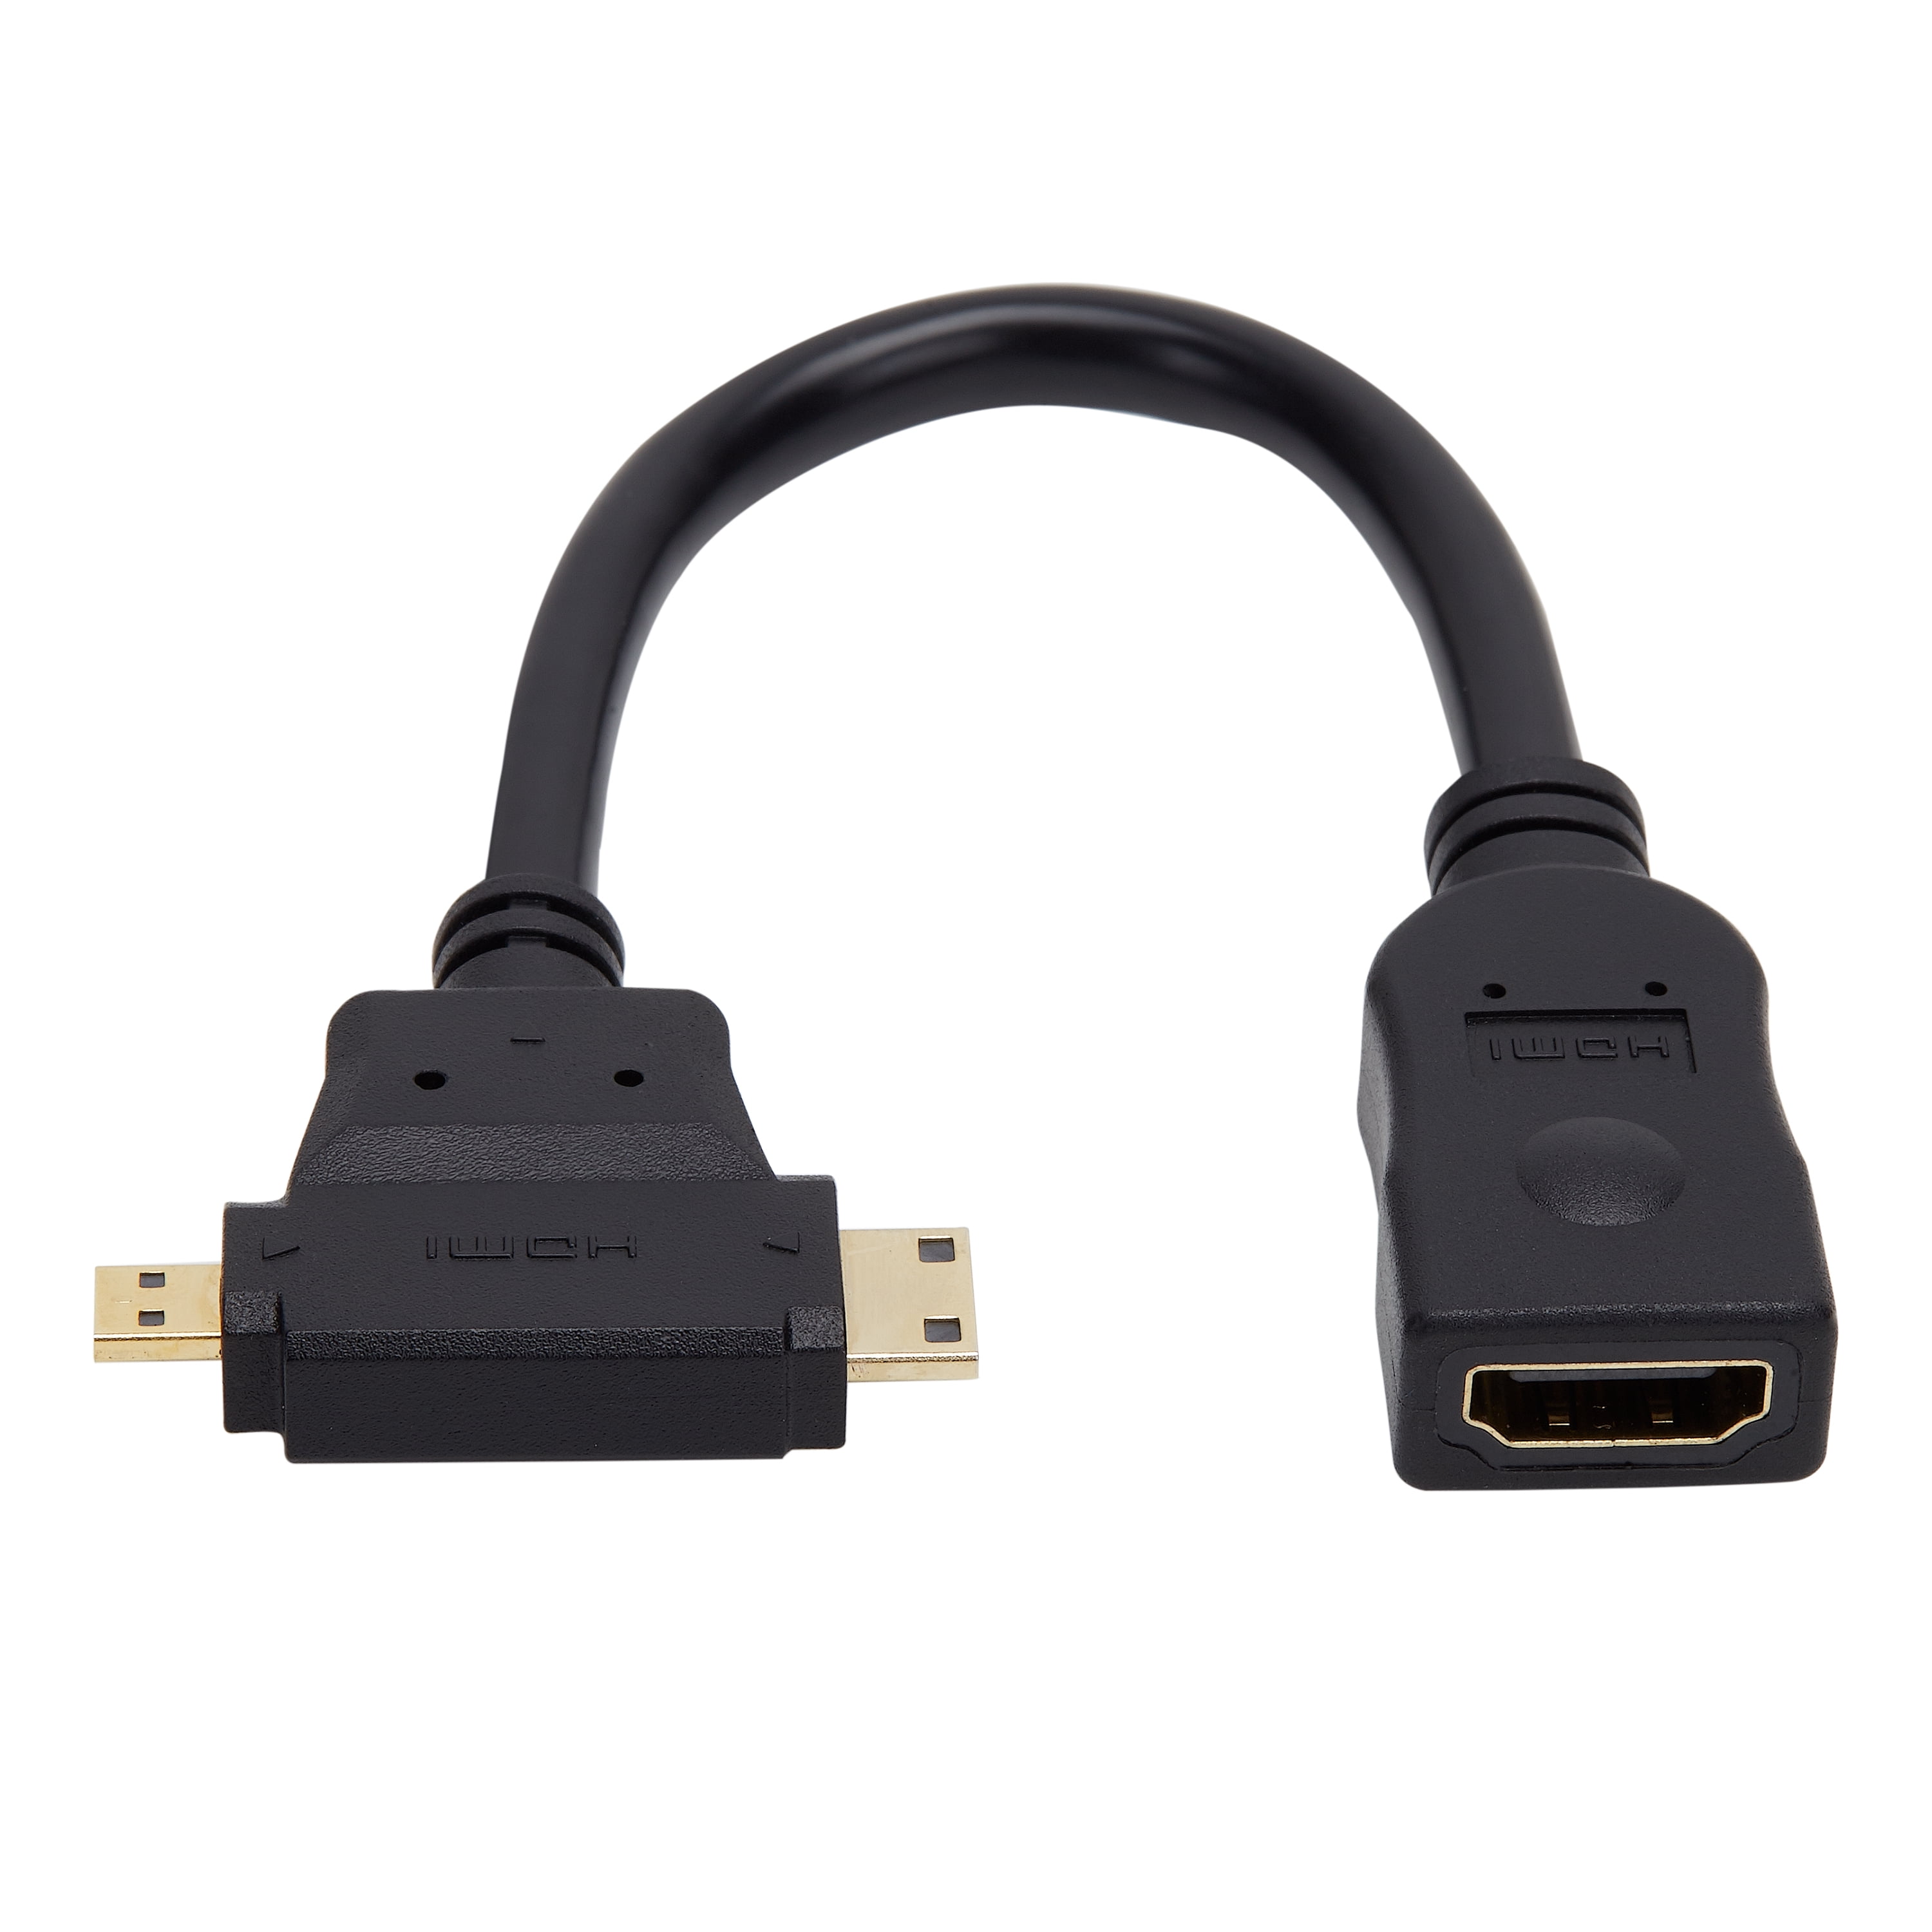 onn Mini and Micro HDMI to HDMI Adapter Black  Walmart com